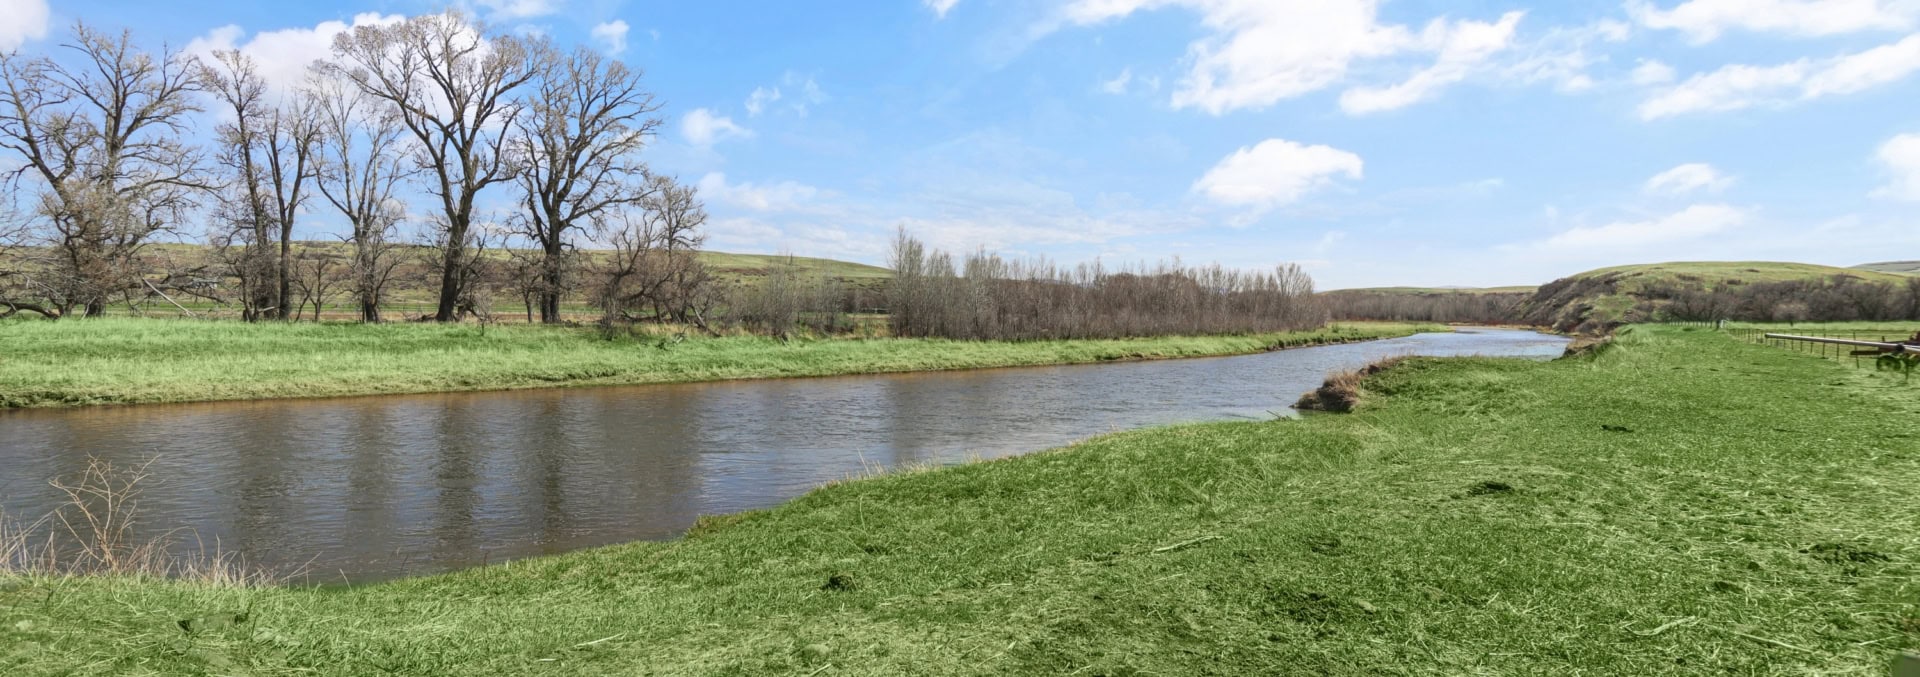 montana fishing property for sale smith river farm